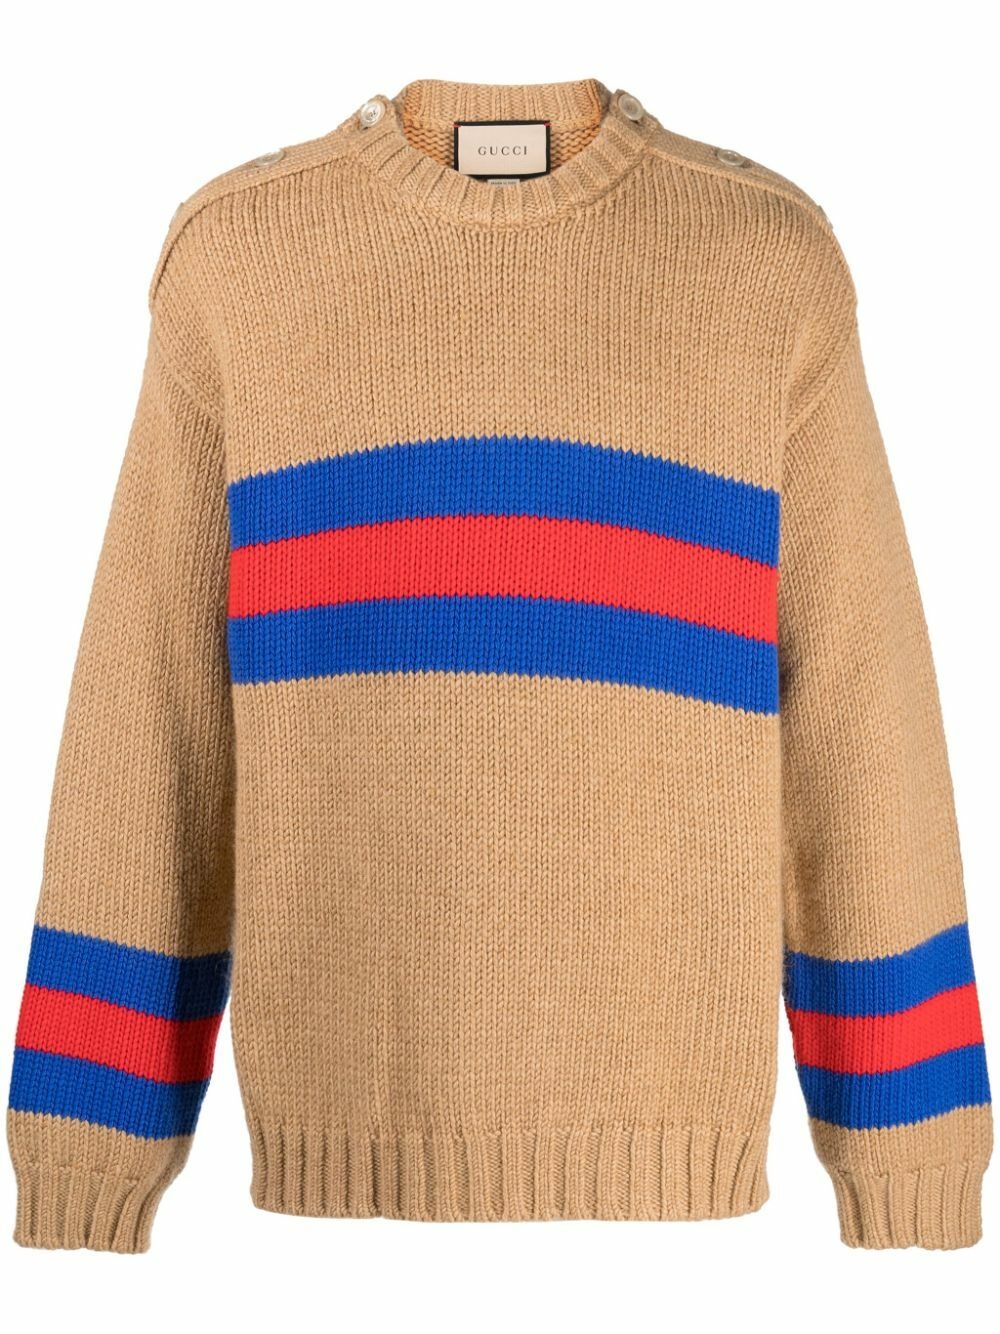 Gucci Red & Blue Striped Tiger Sweater SZ M - ShopperBoard